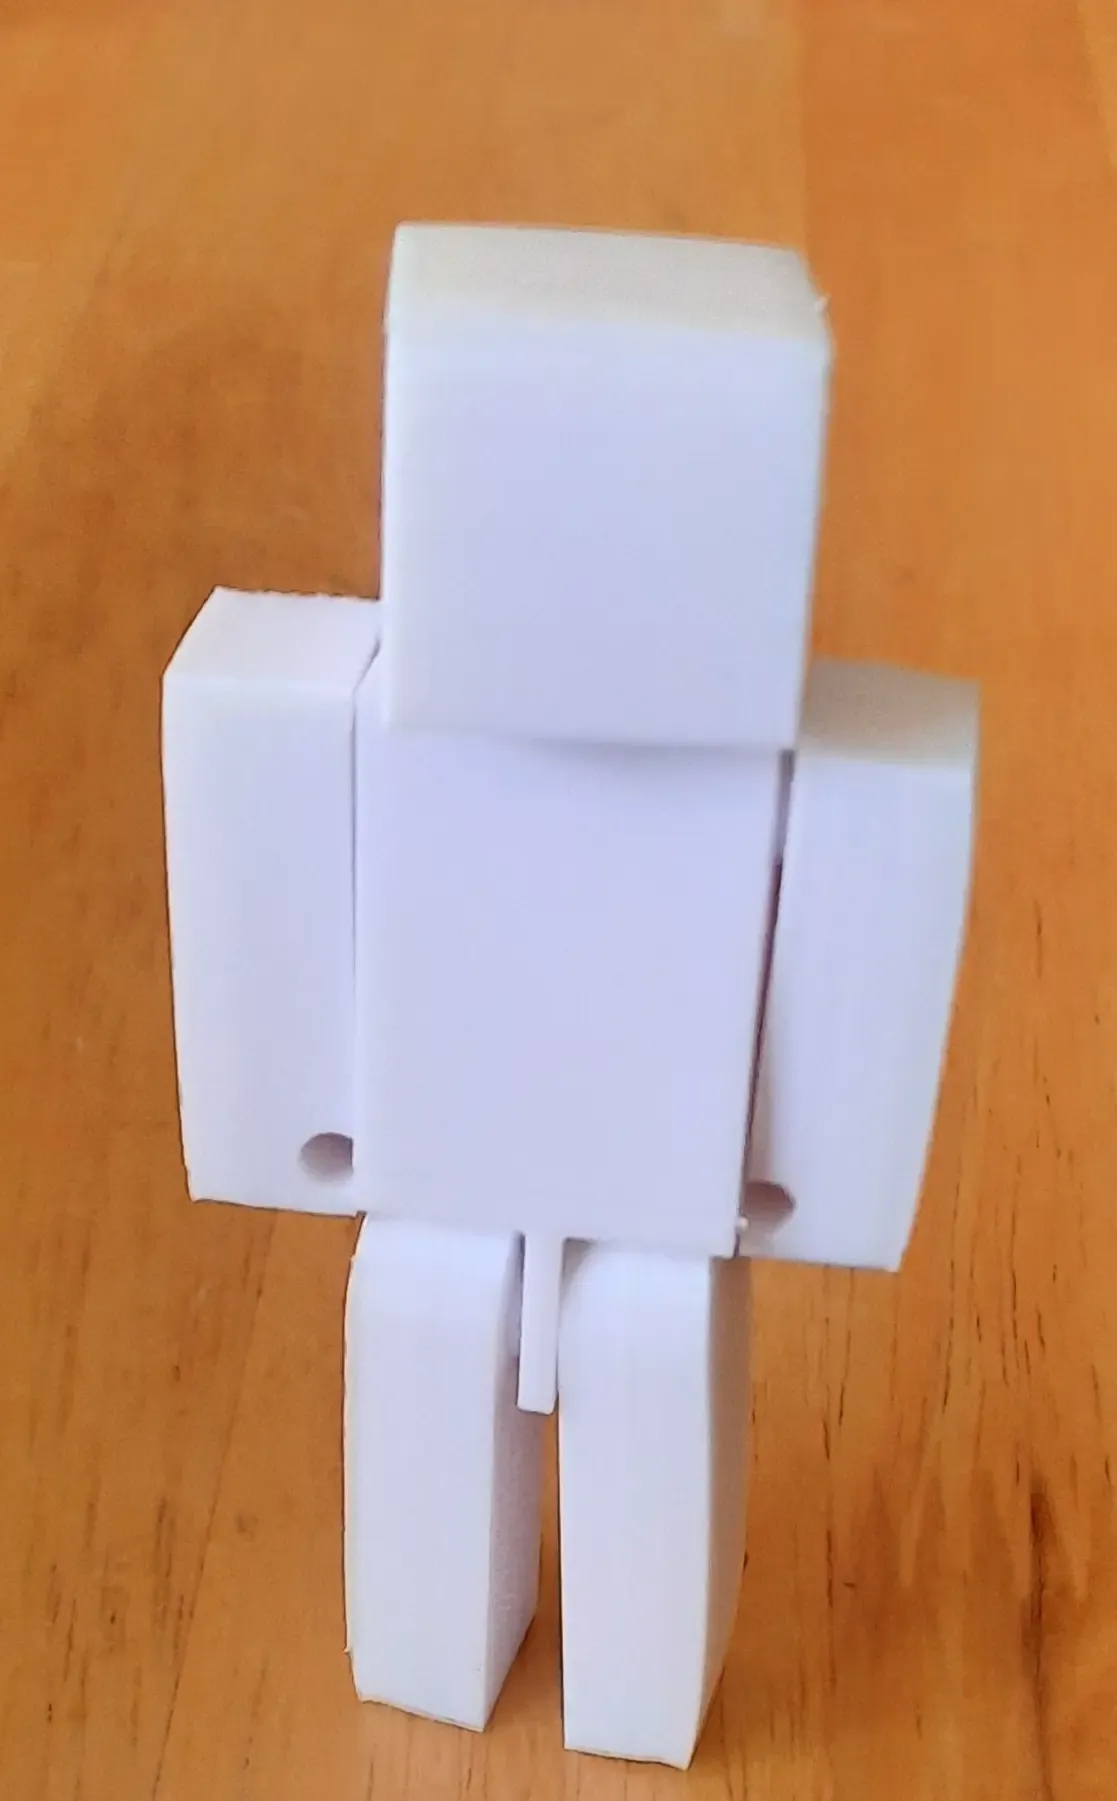 Minecraft figure